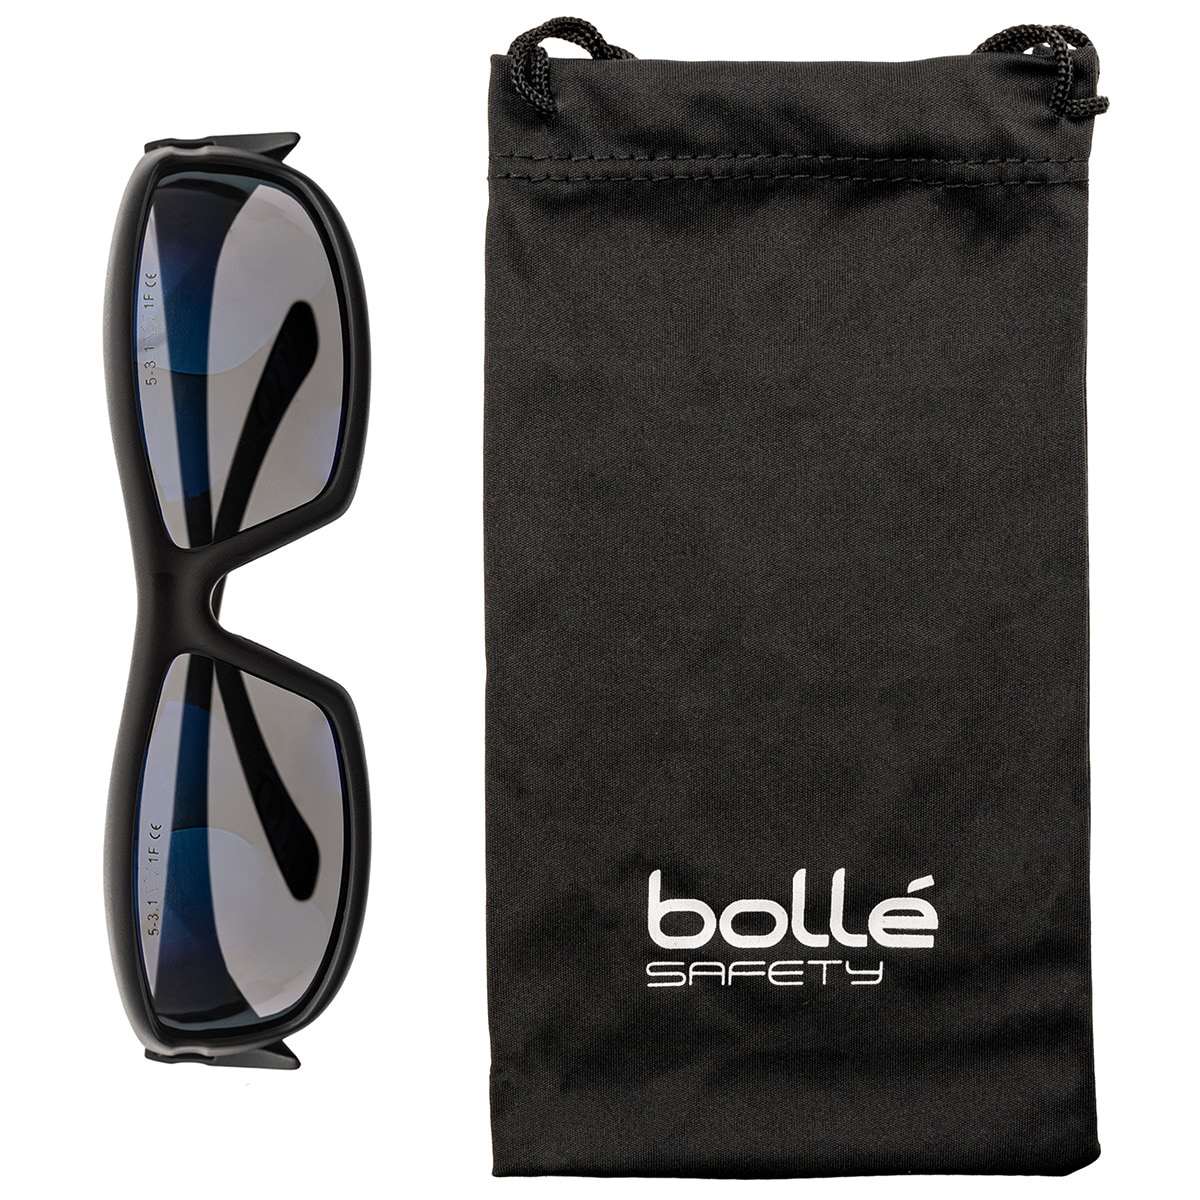 Тактичні окуляри Bolle Solis Blue Flash